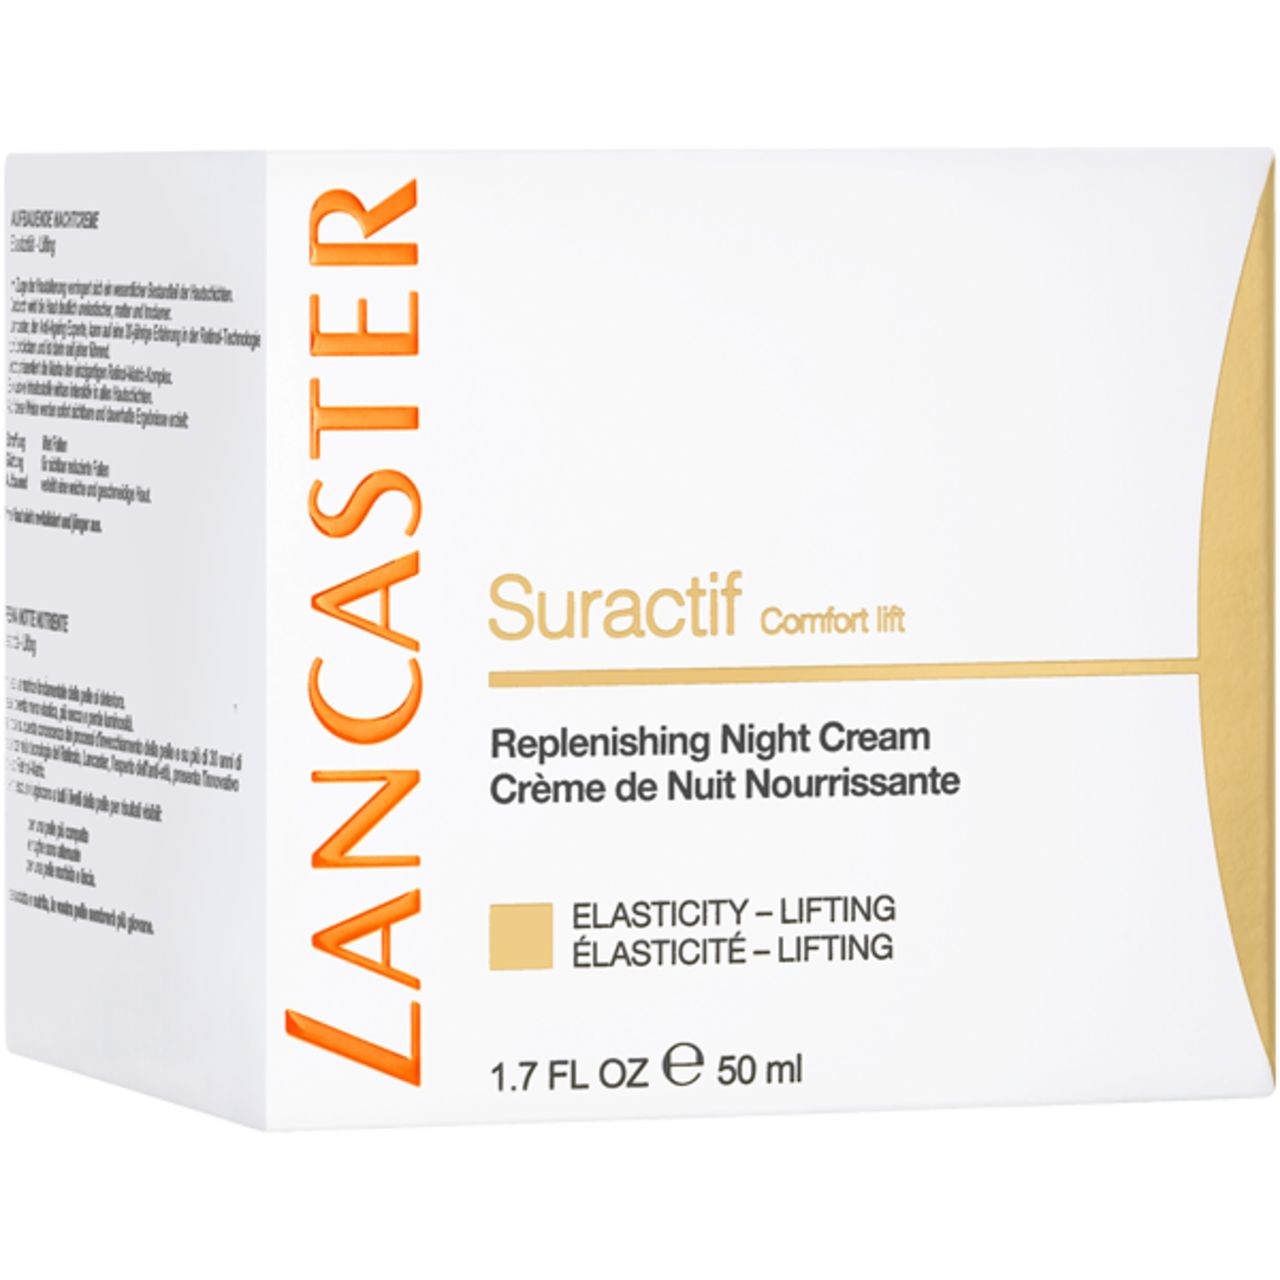 Lancaster, Suractif Comfort Lift Replenishing Night Cream